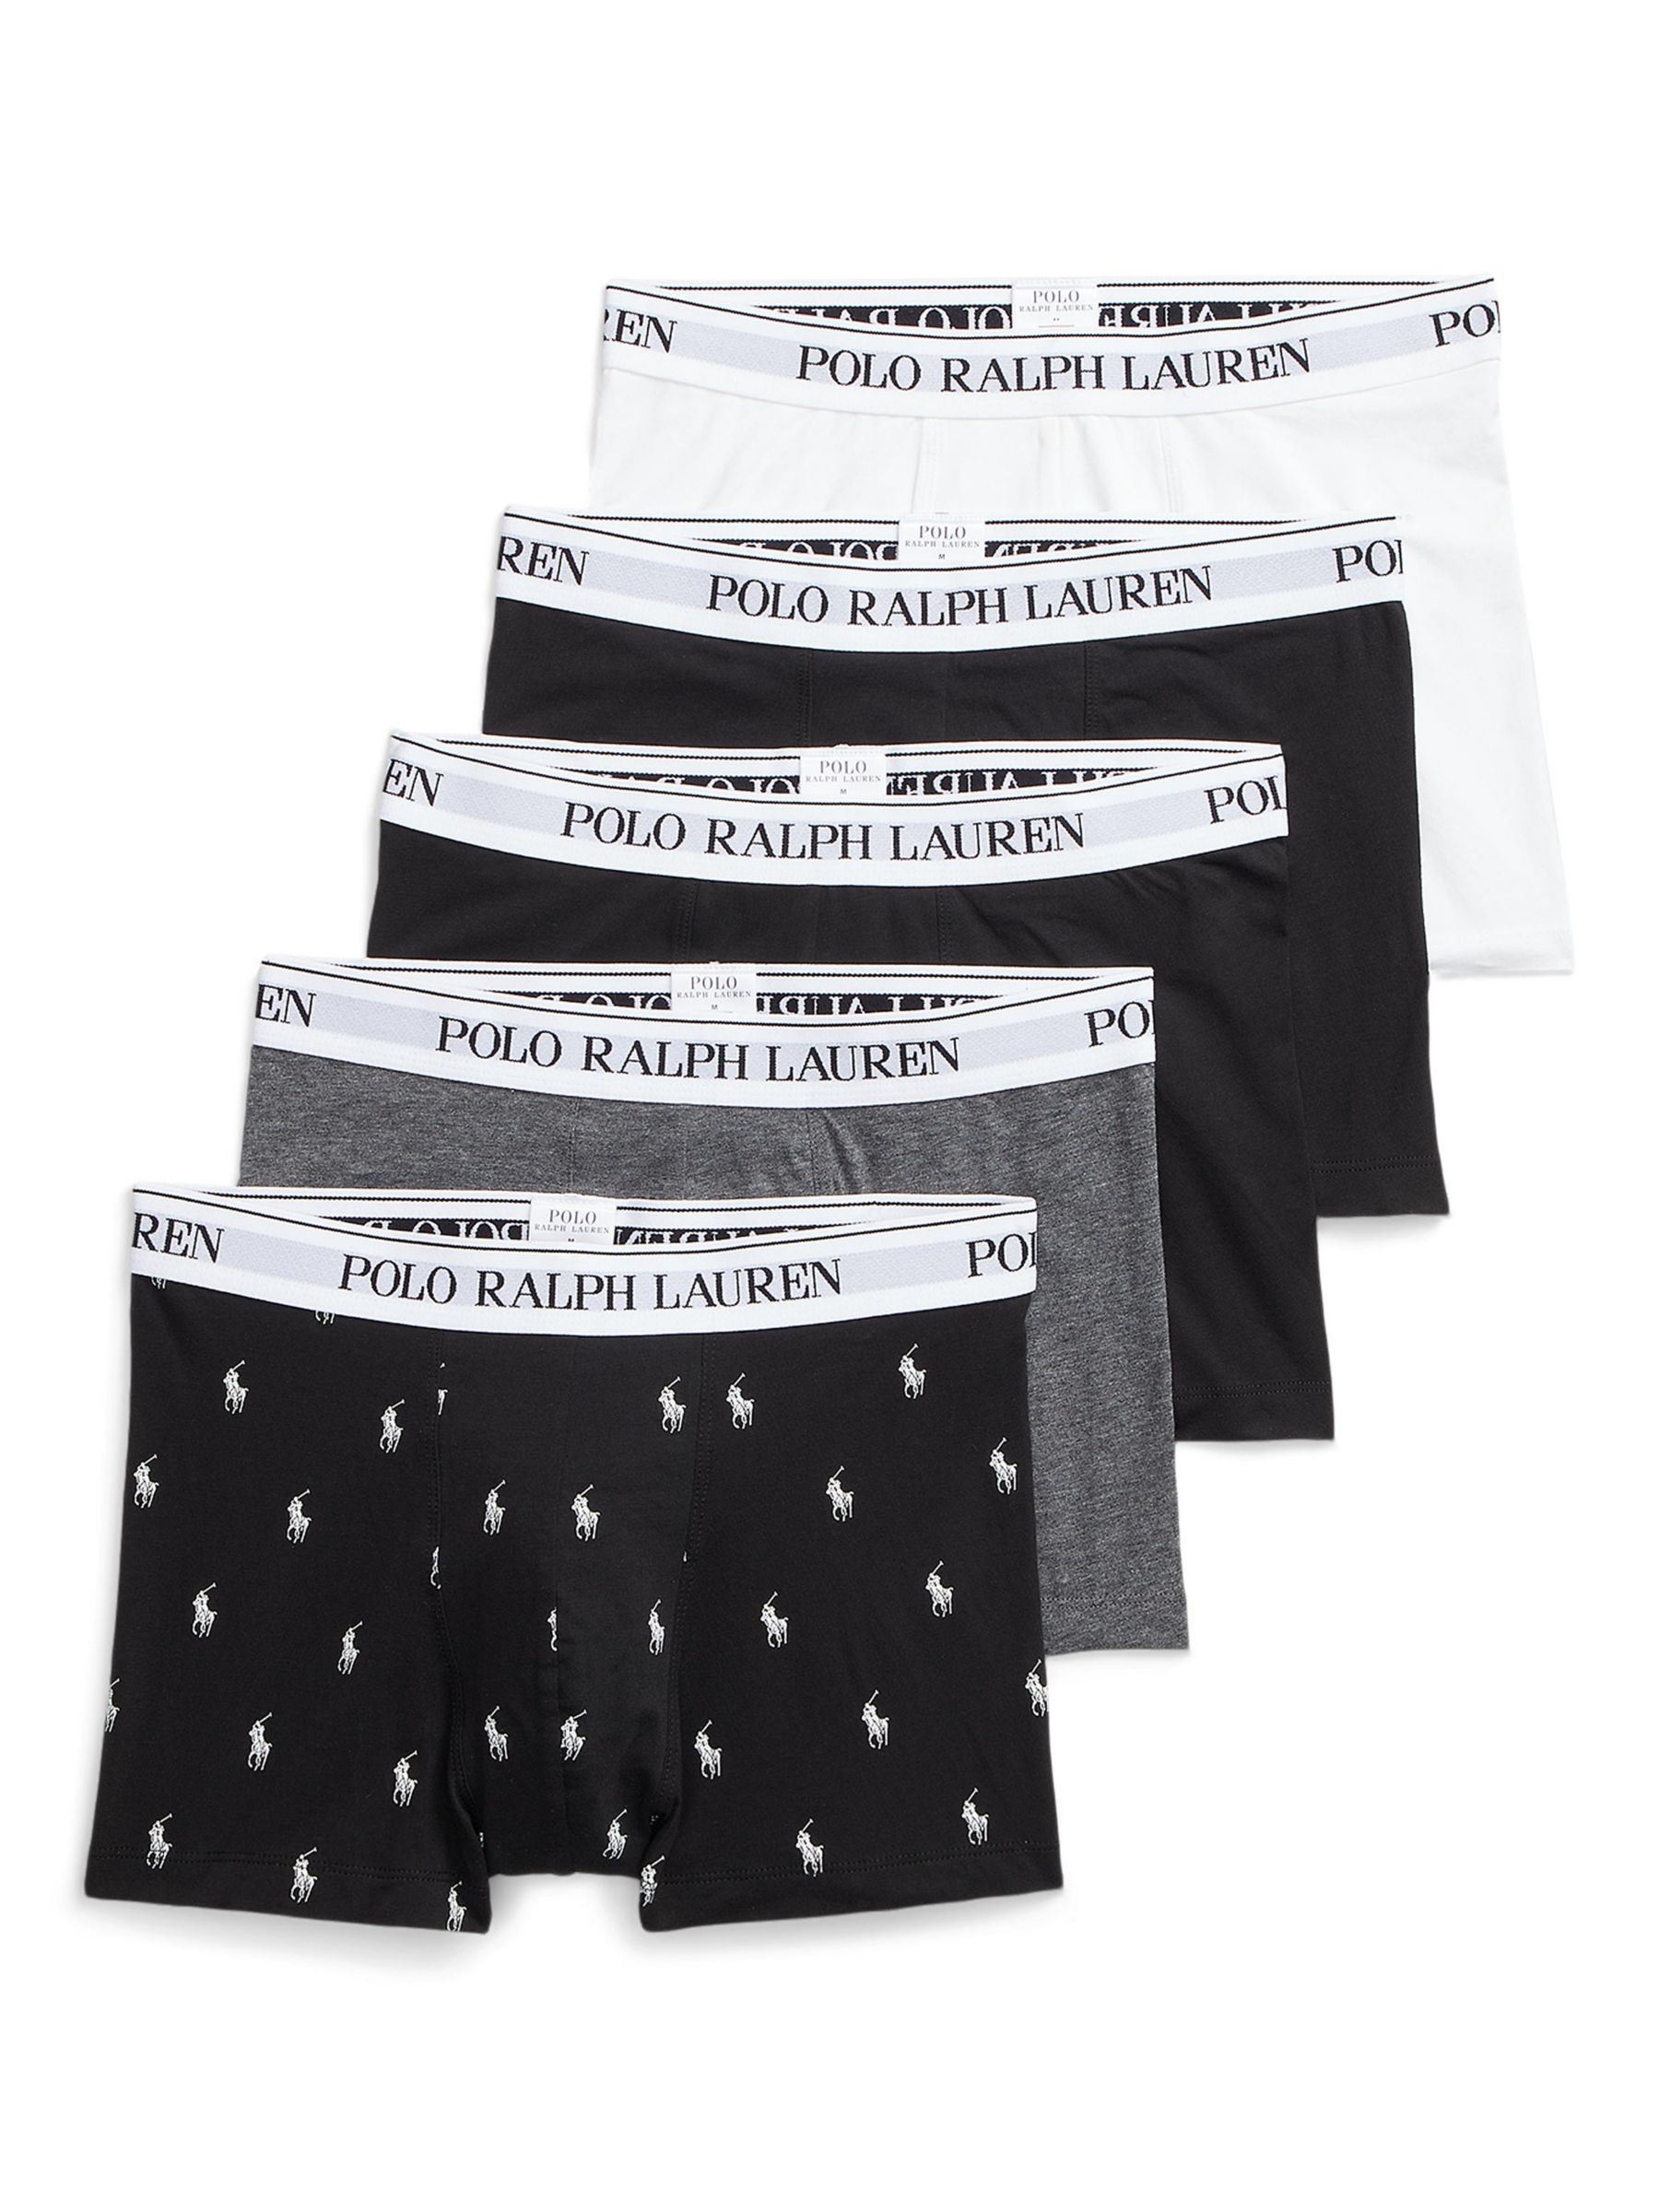 Polo Ralph Lauren Plain Logo Cotton Stretch Trunks, Pack of 5, Mono, S